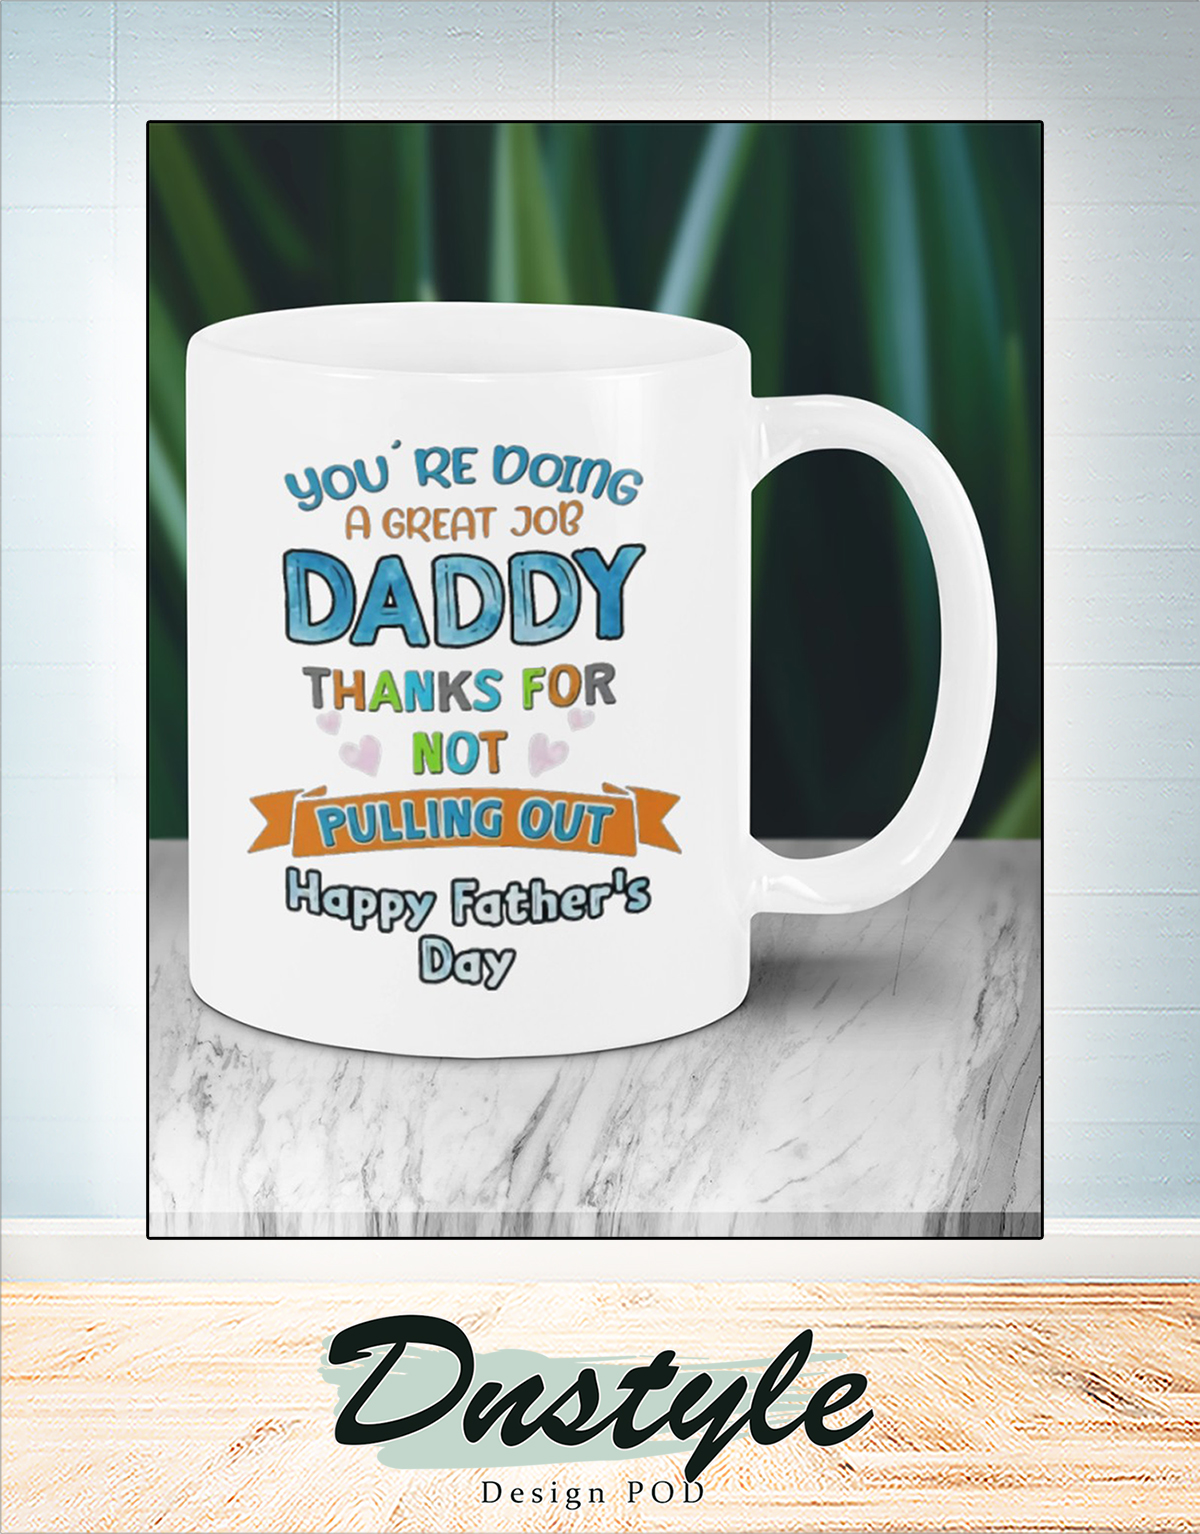 You're doing a great job daddy mug 1